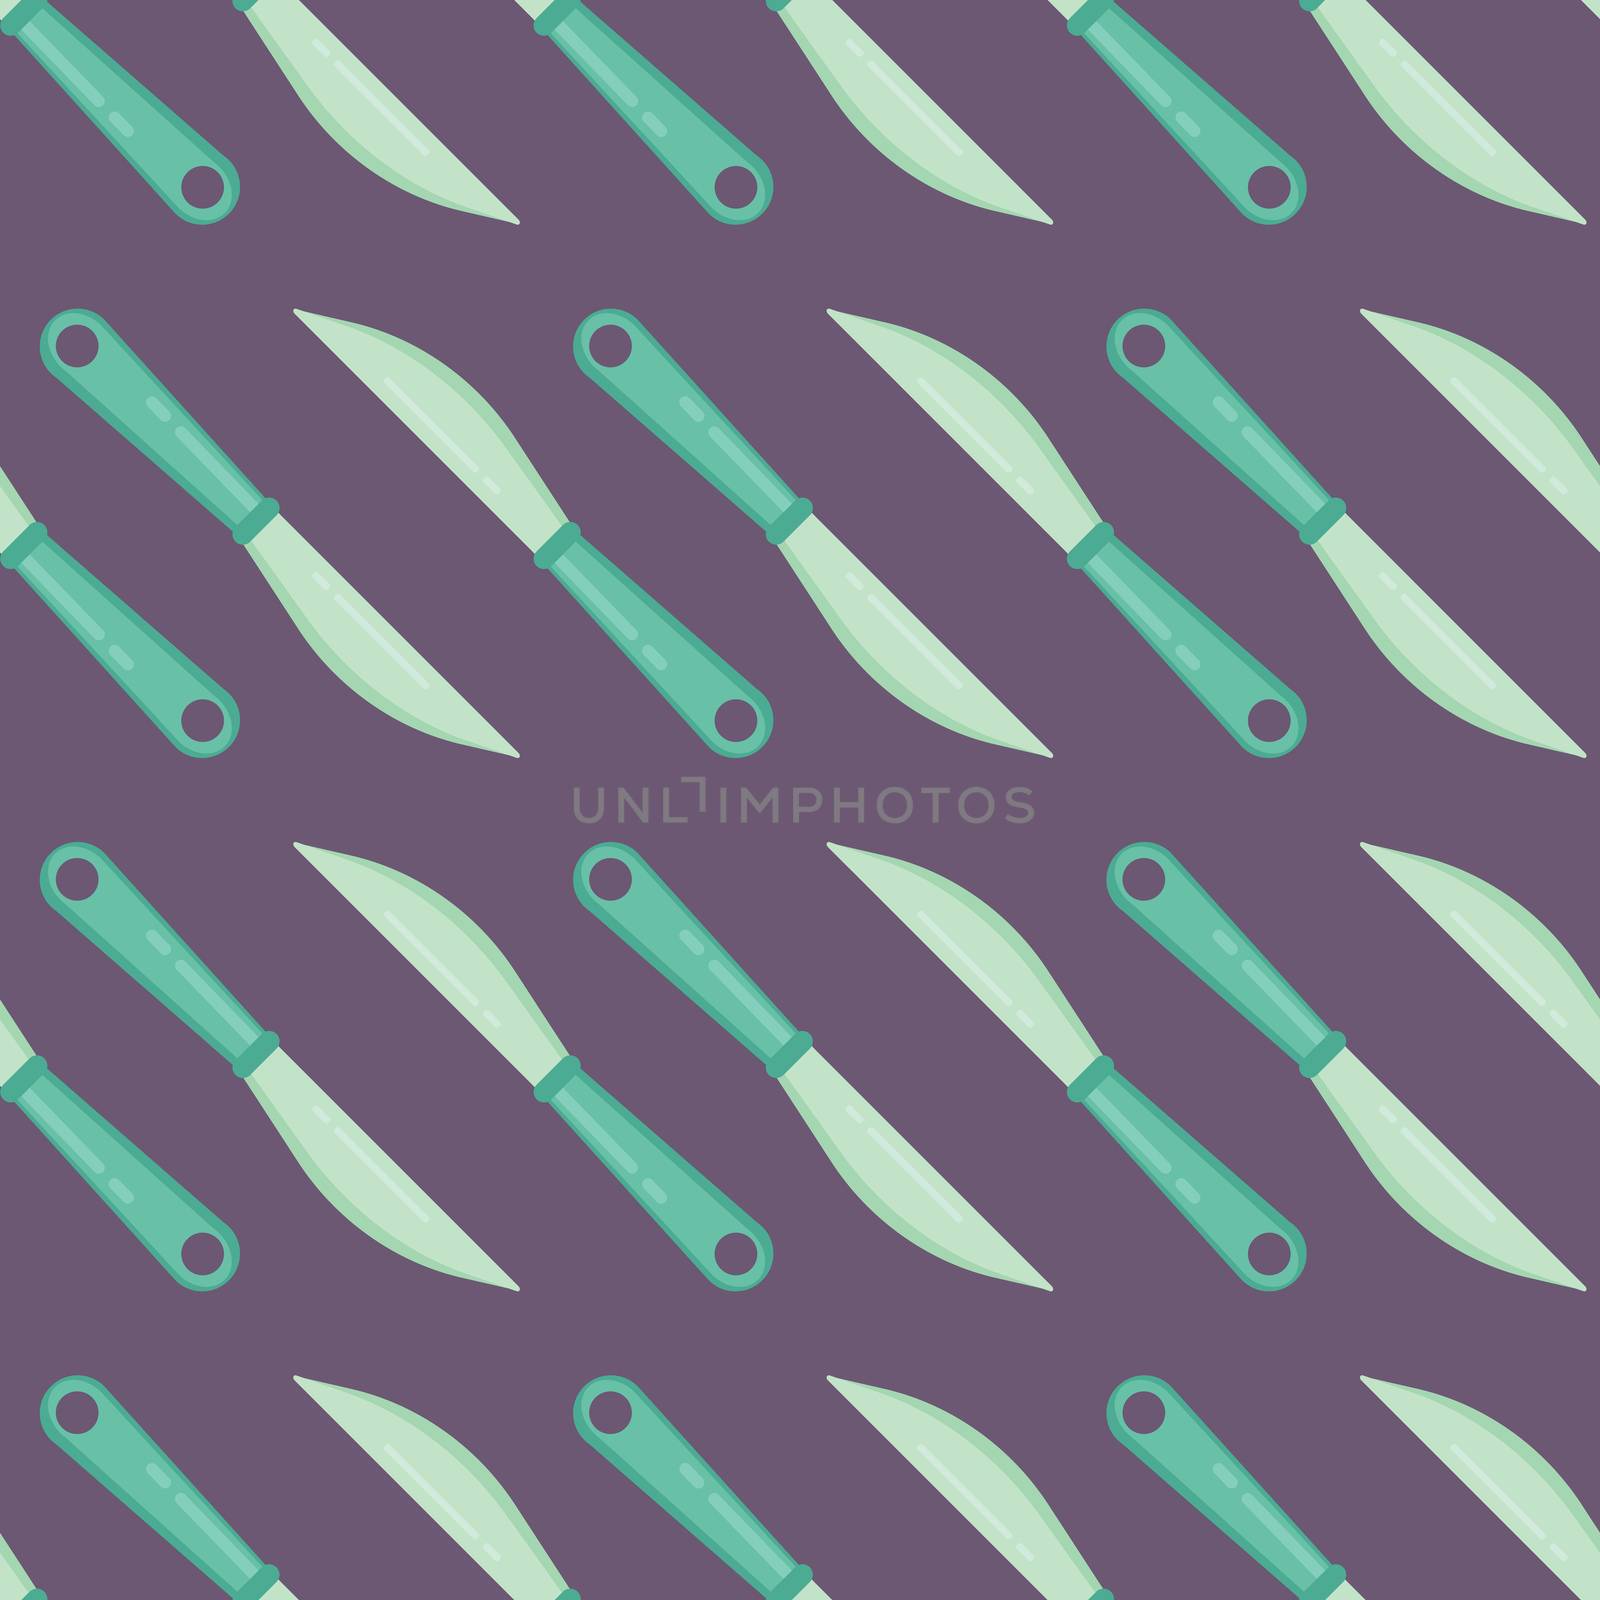 Knifes pattern , illustration, vector on white background